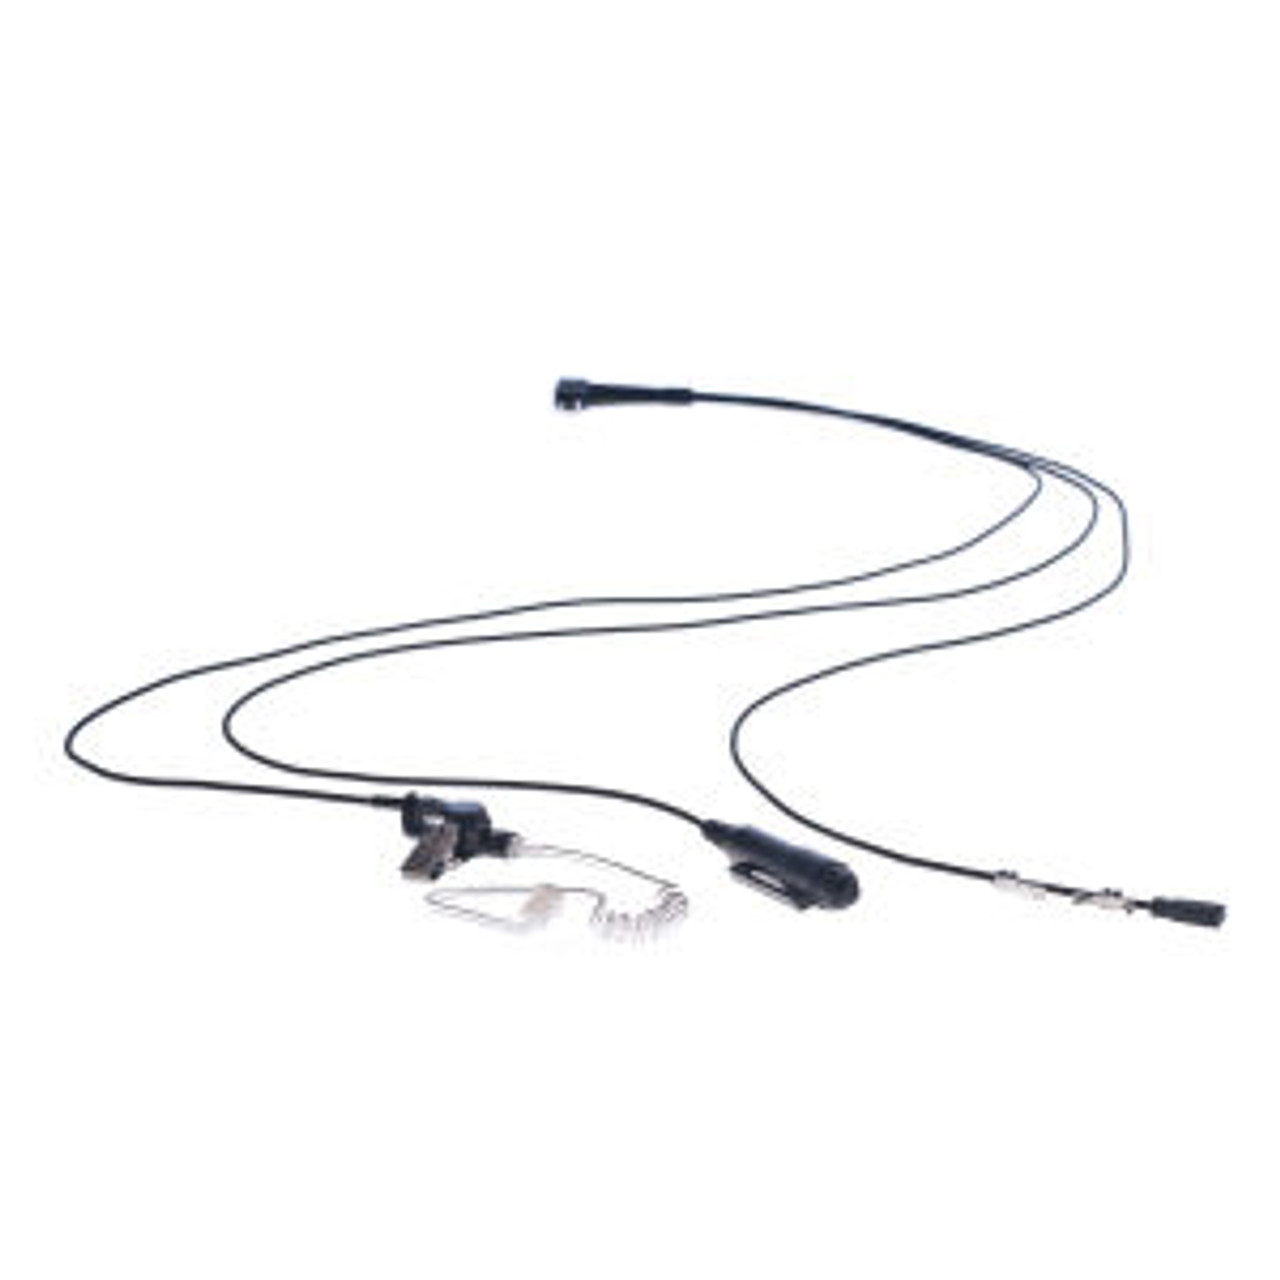 ICOM IC-F51 3-Wire Surveillance Kit